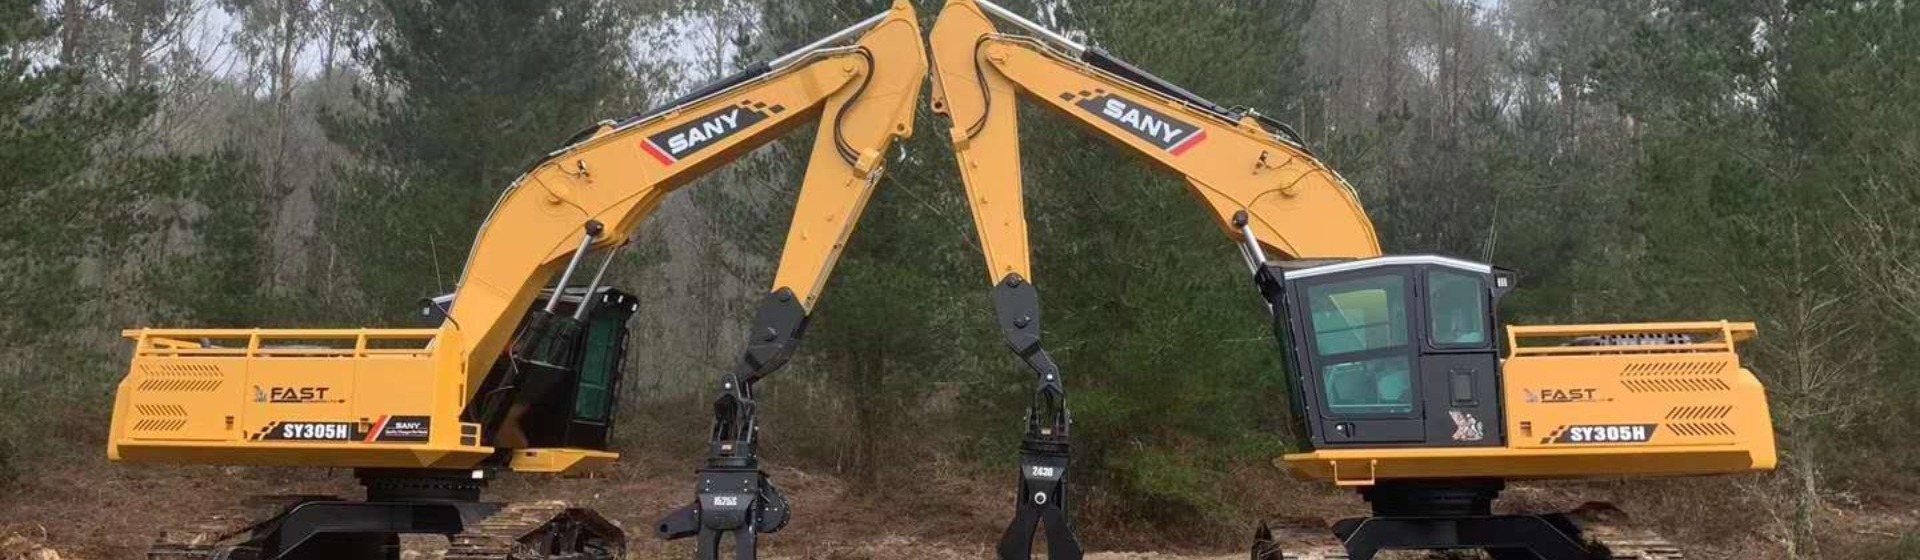 5 Safety Innovations of the Sany Excavator Range